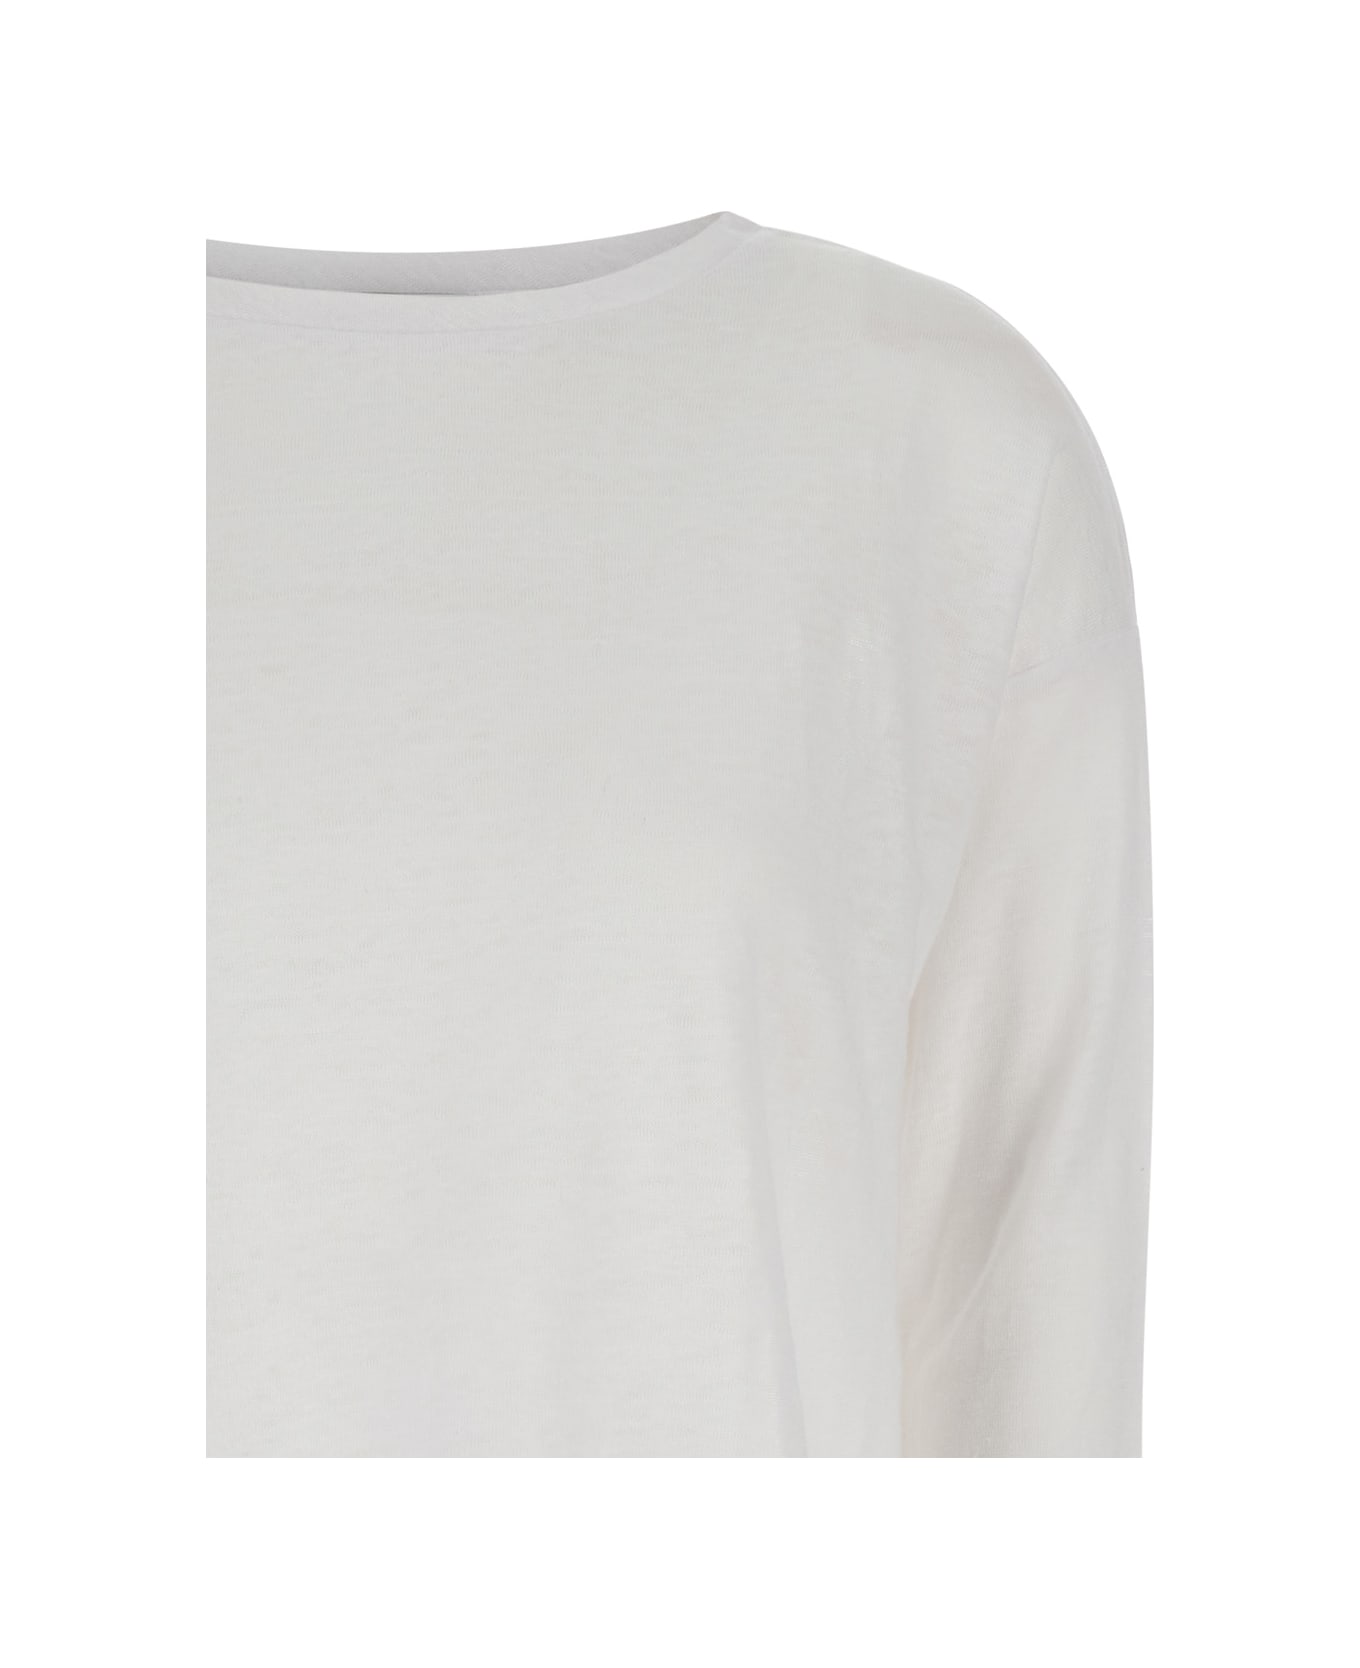 Allude White Shirt With Boart Neckline In Linen Woman - White ニットウェア